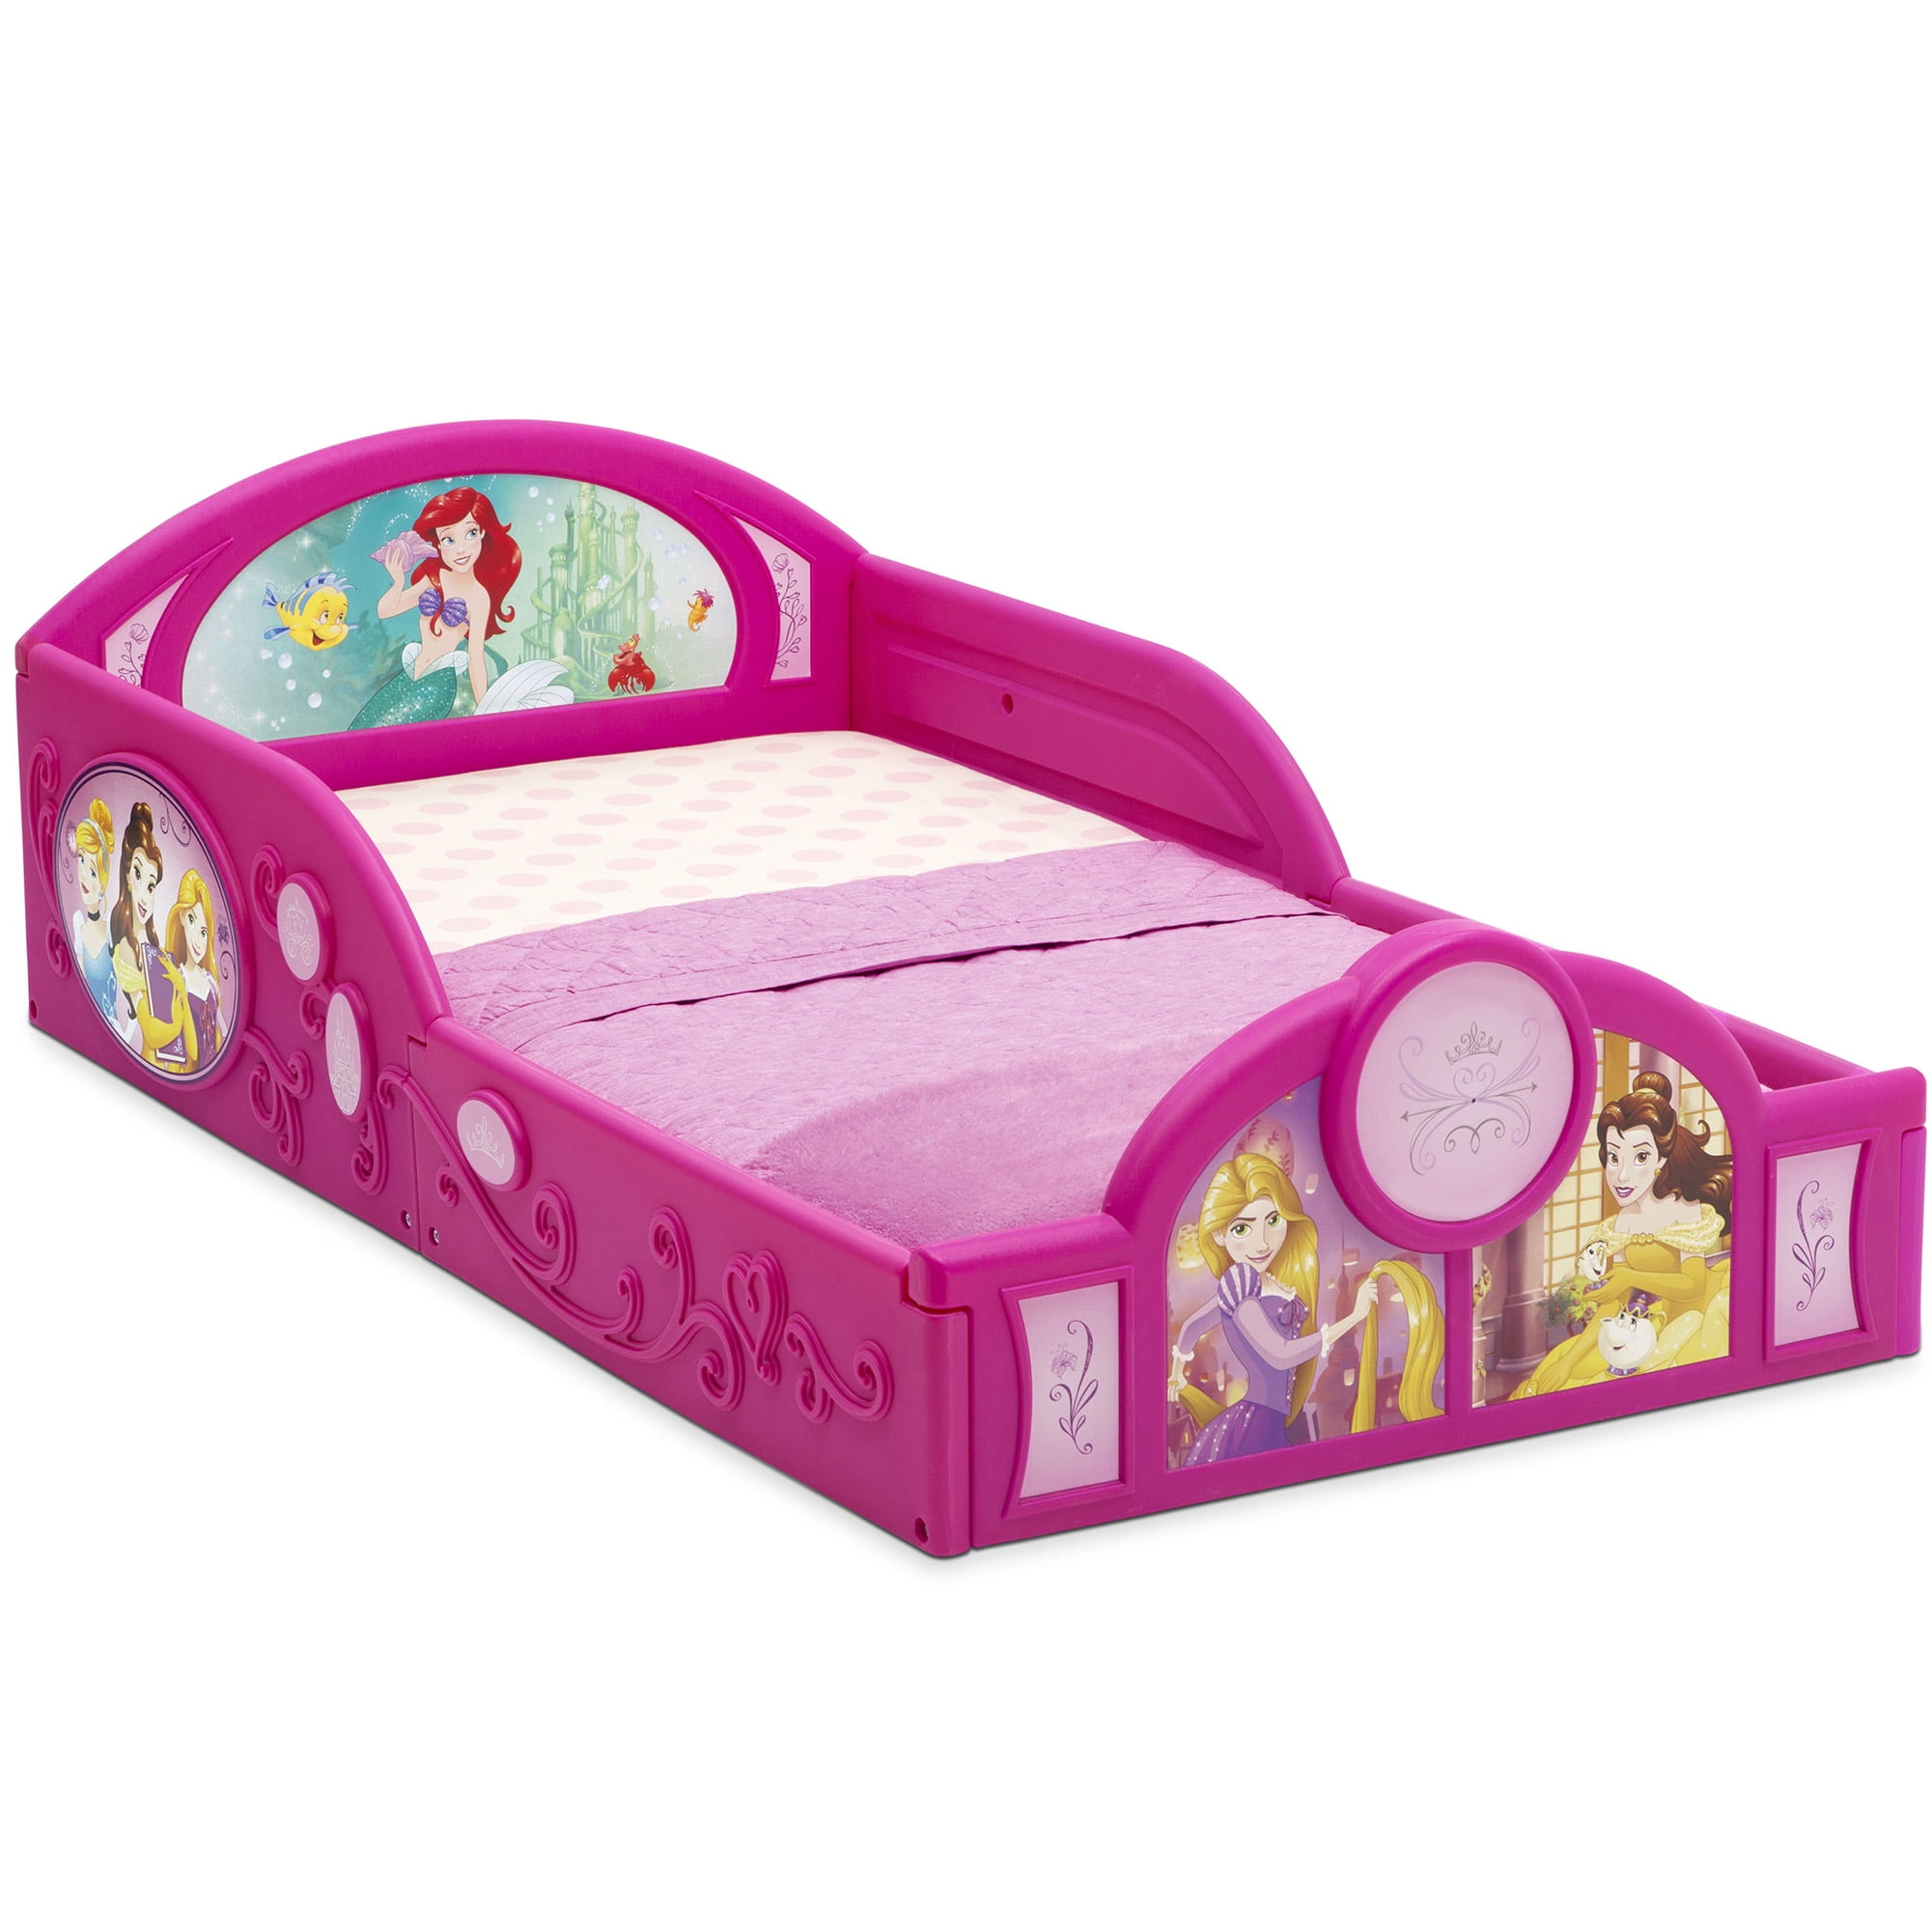 Disney Princess Plastic Sleep And Play Toddler Bed By Delta Children Walmart Com Walmart Com